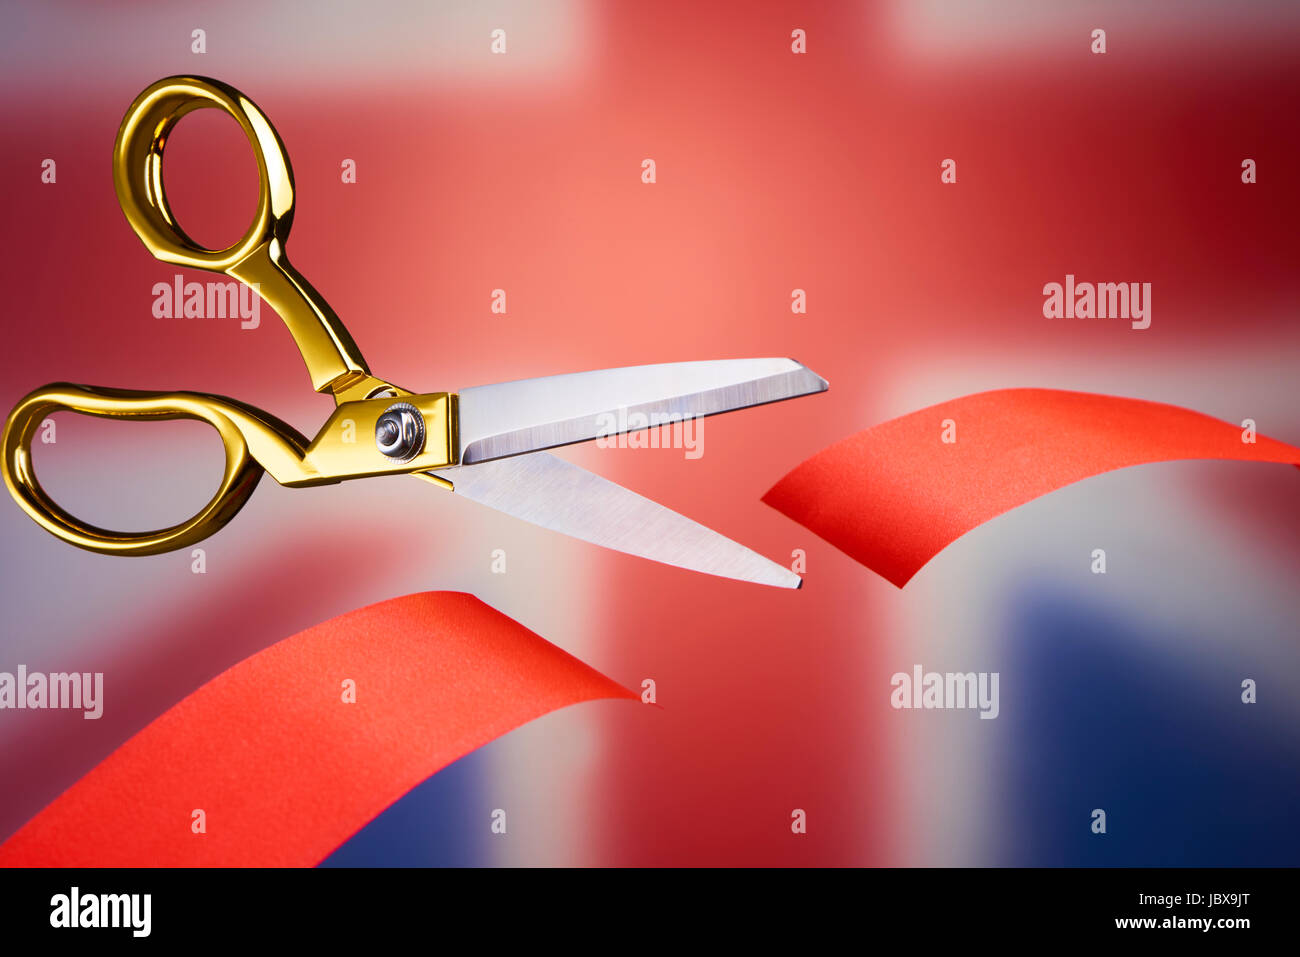 Golden scissors cutting red ribbon, symbolising brexit Stock Photo